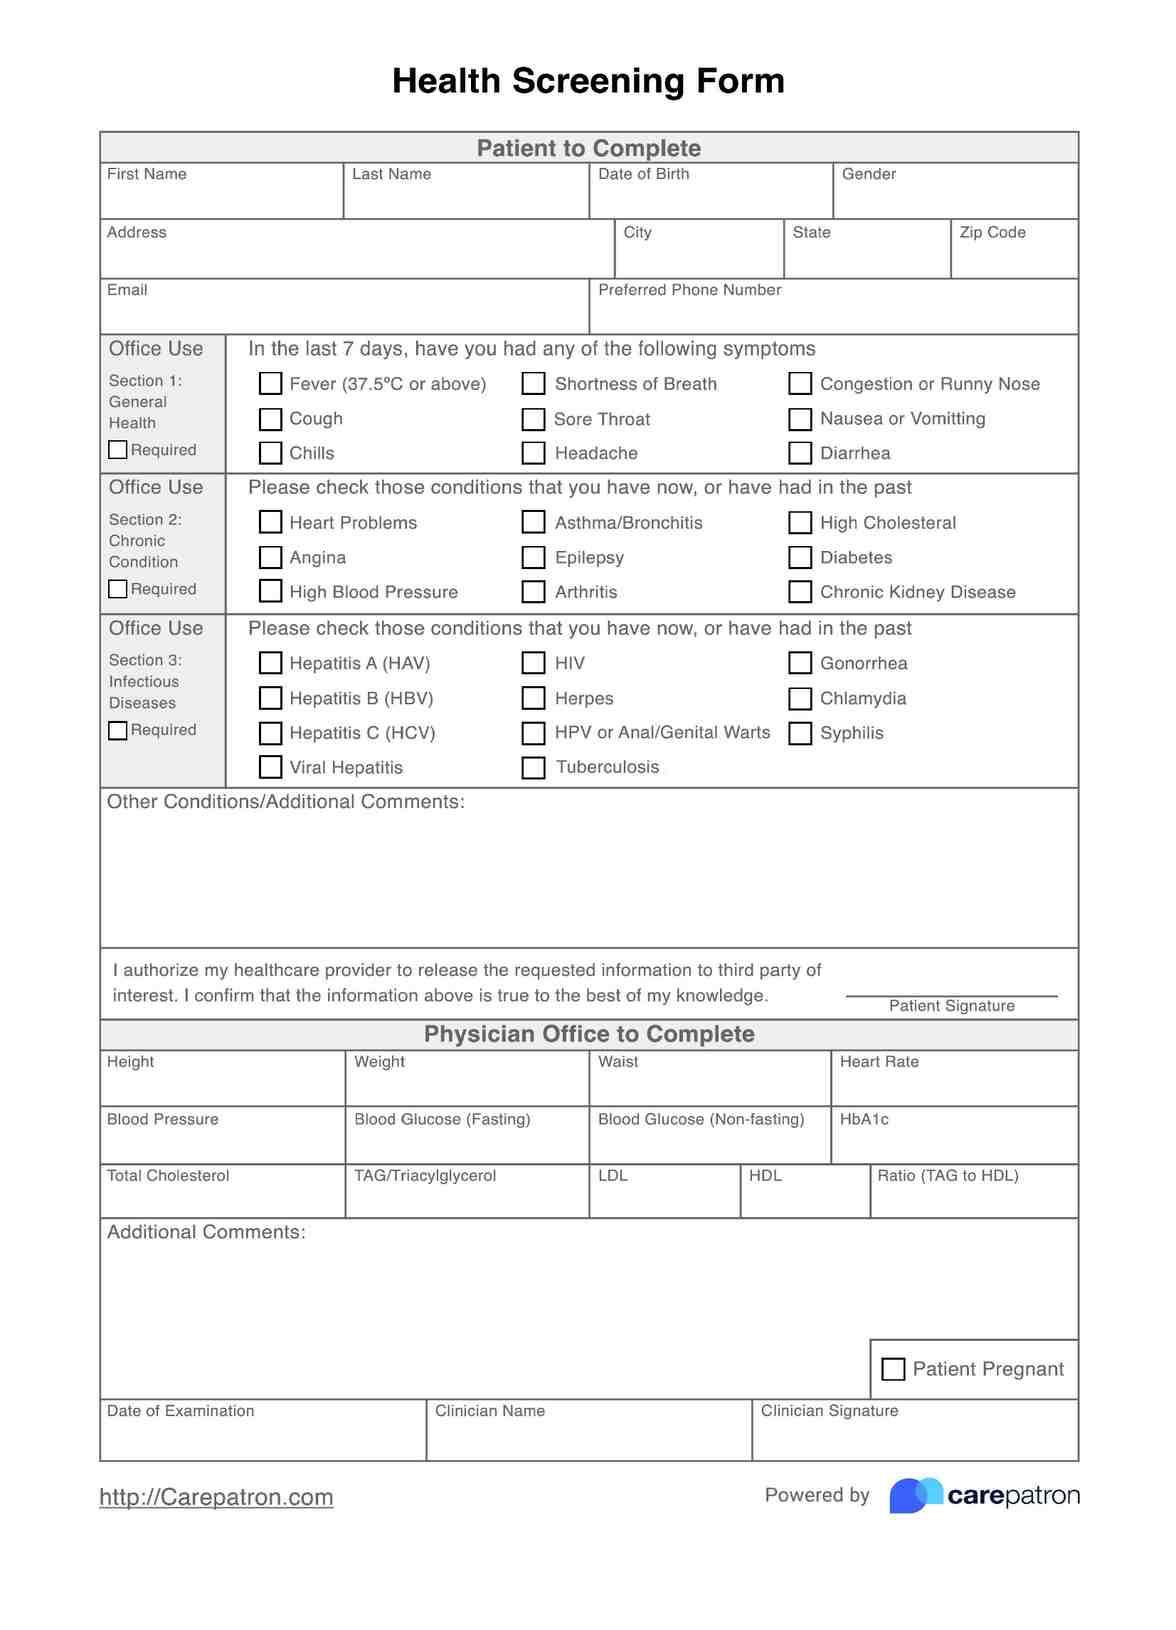 Health Screening Form PDF Example